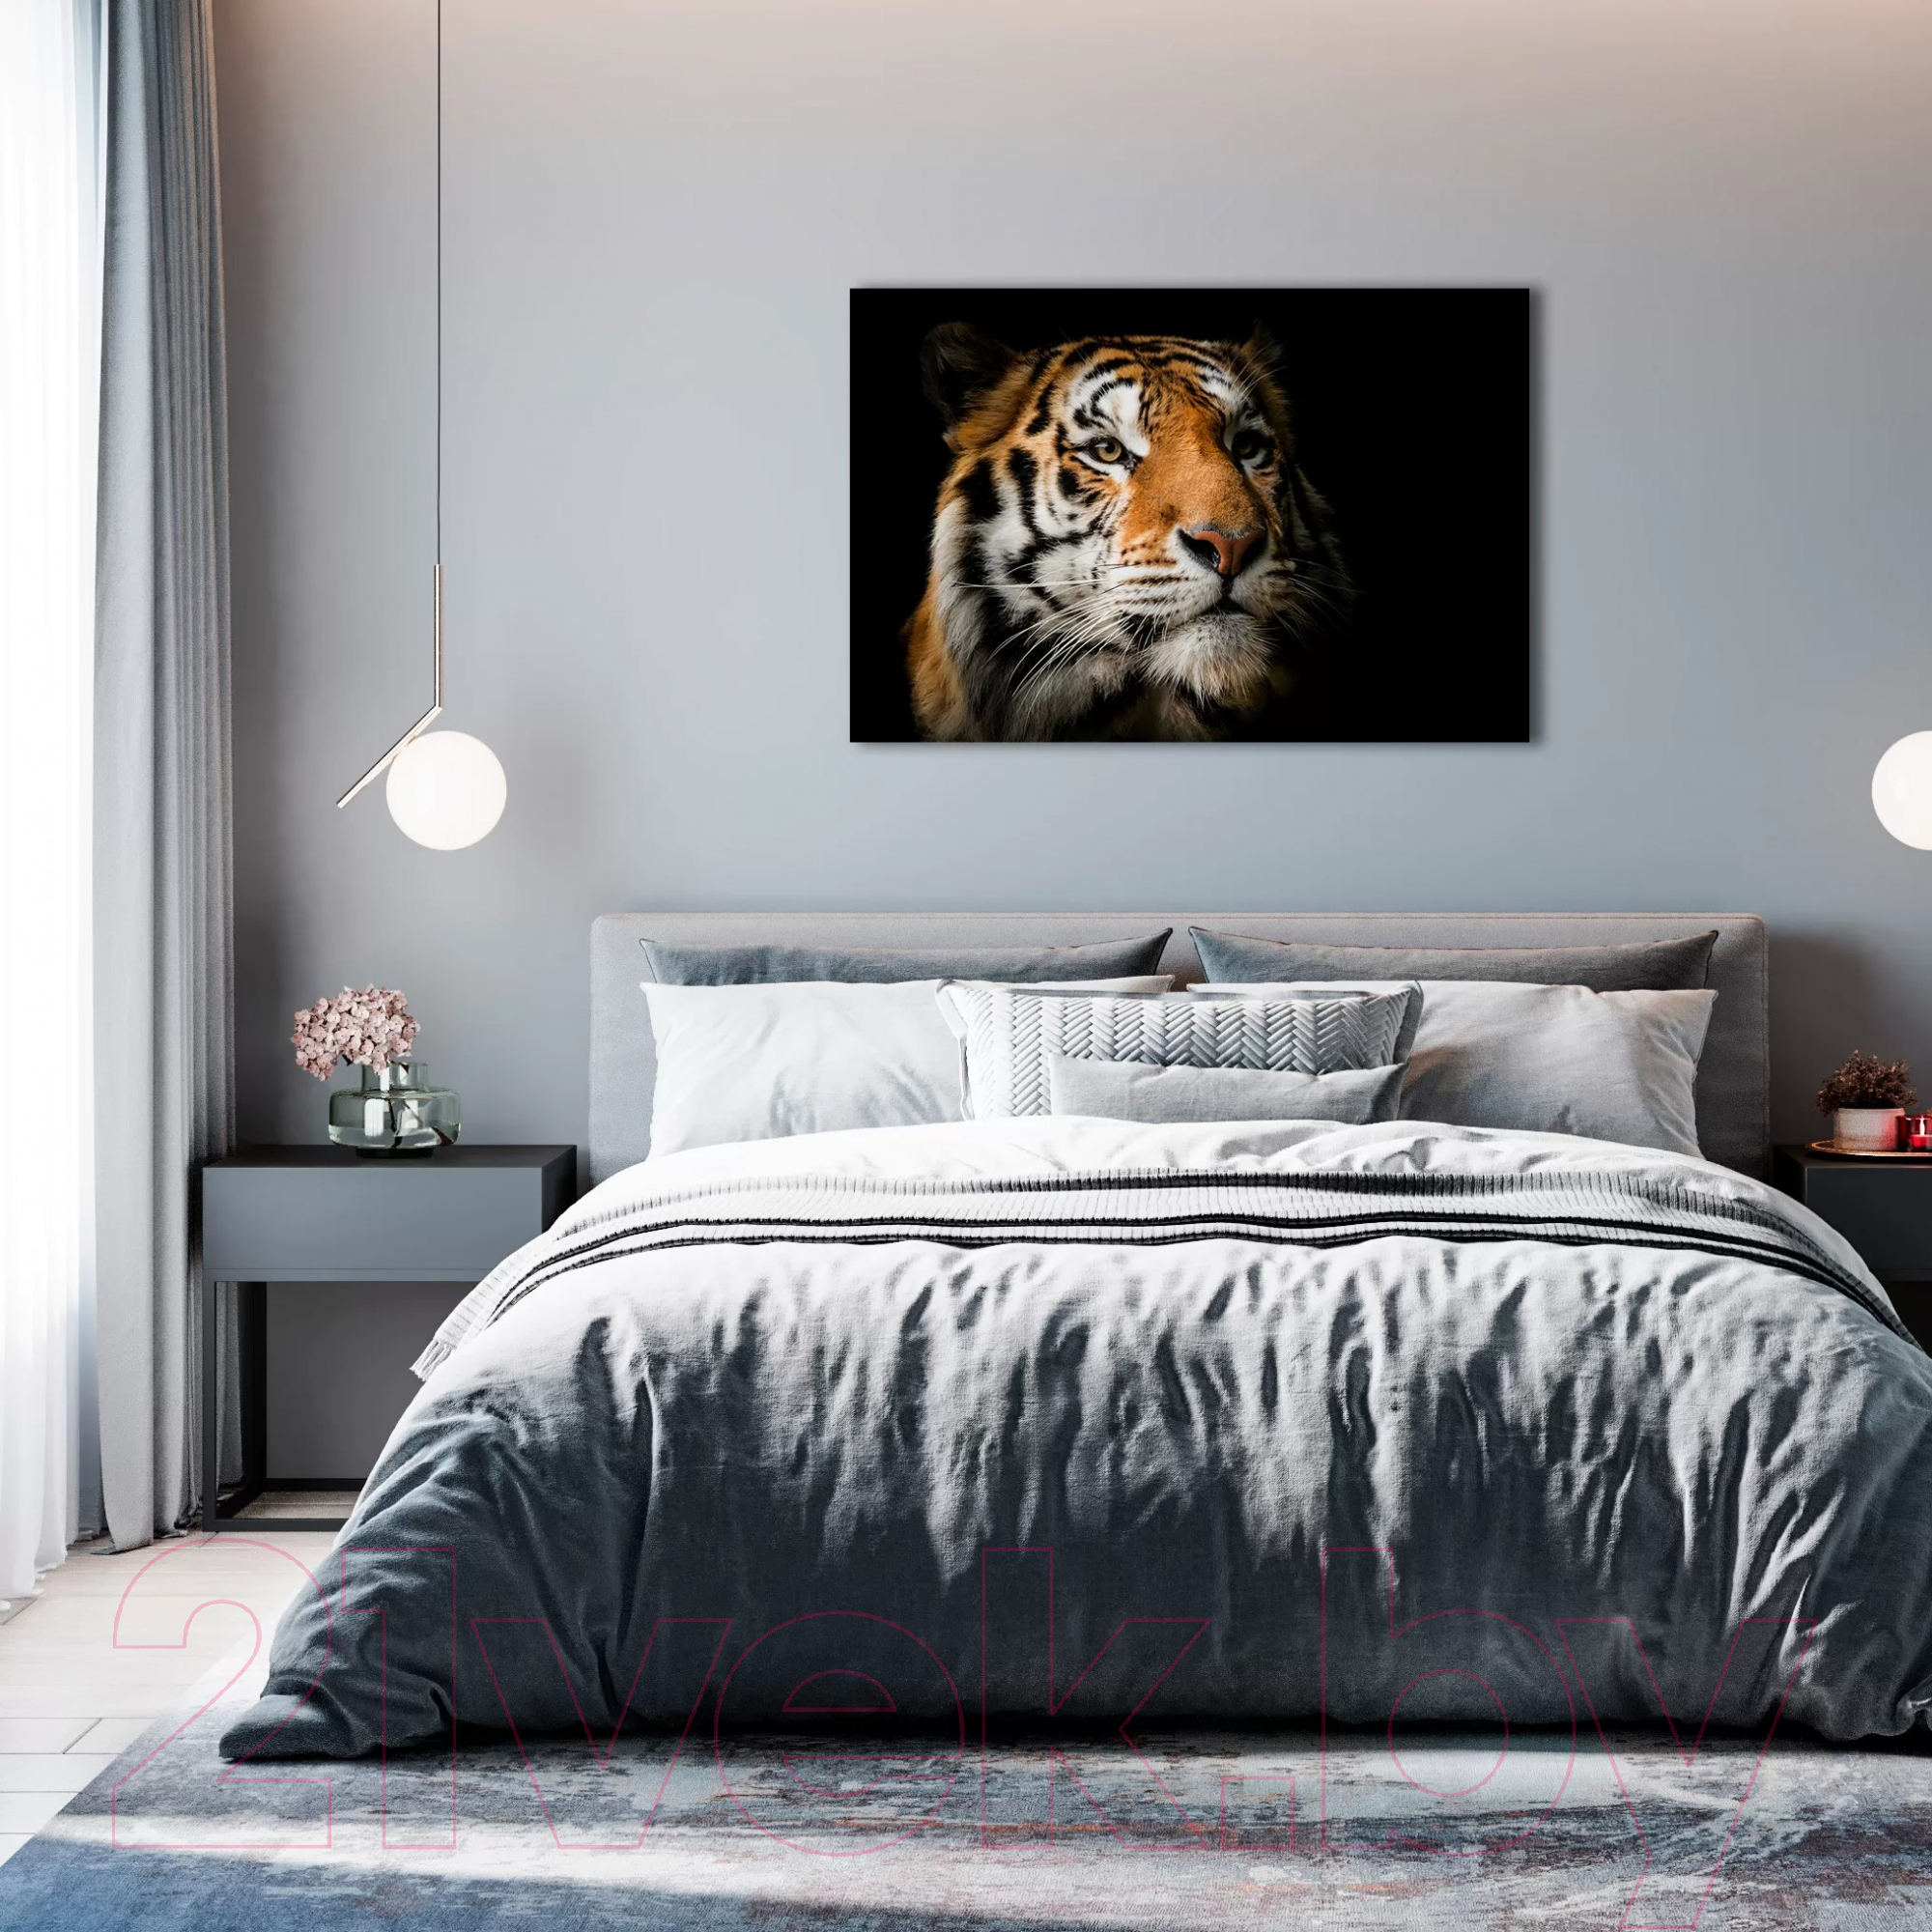 Картина на стекле Stamprint Солнечный тигр AN016